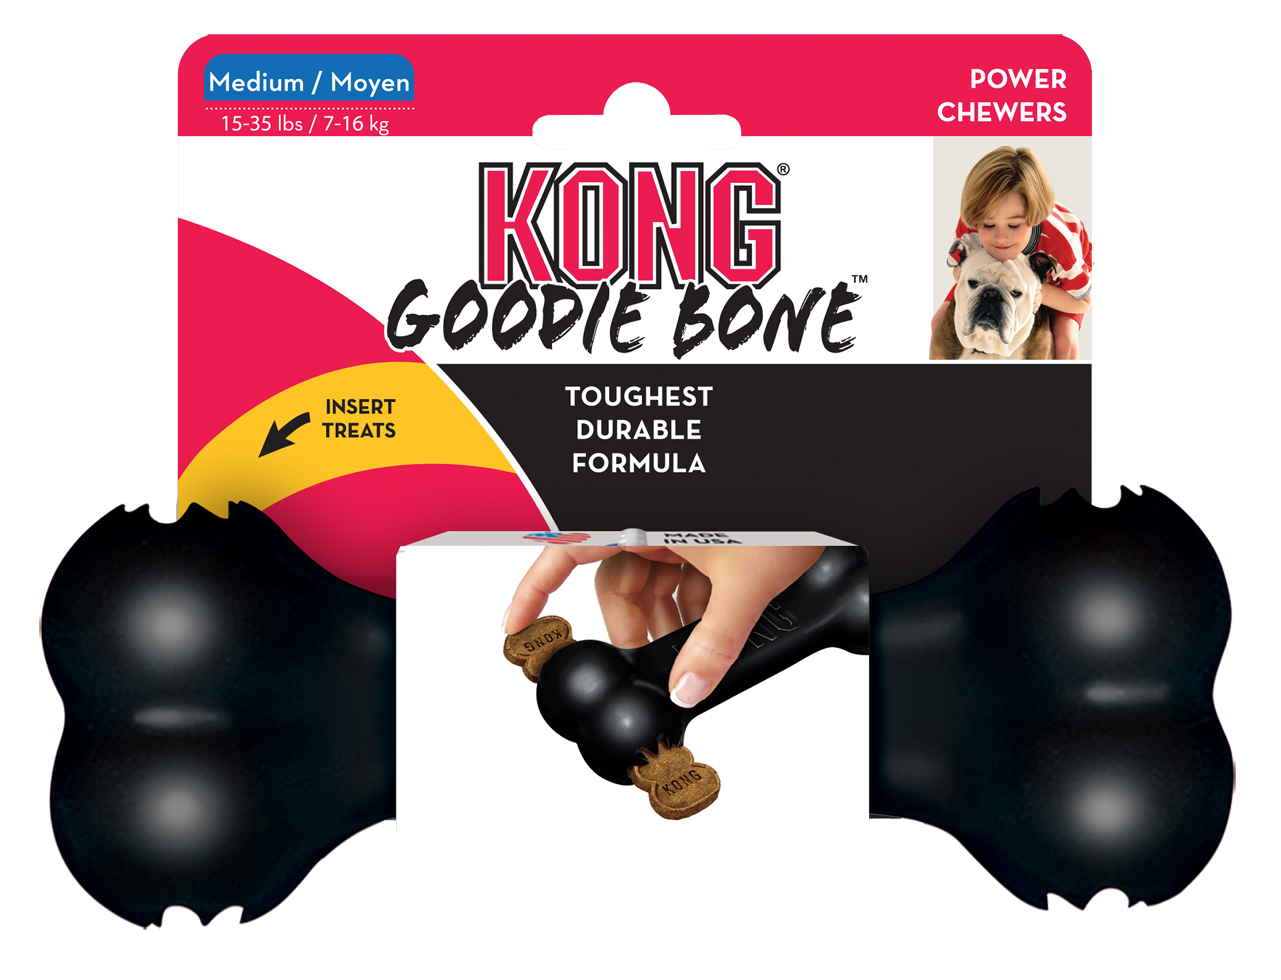 Kong - Extreme Goodie Bone